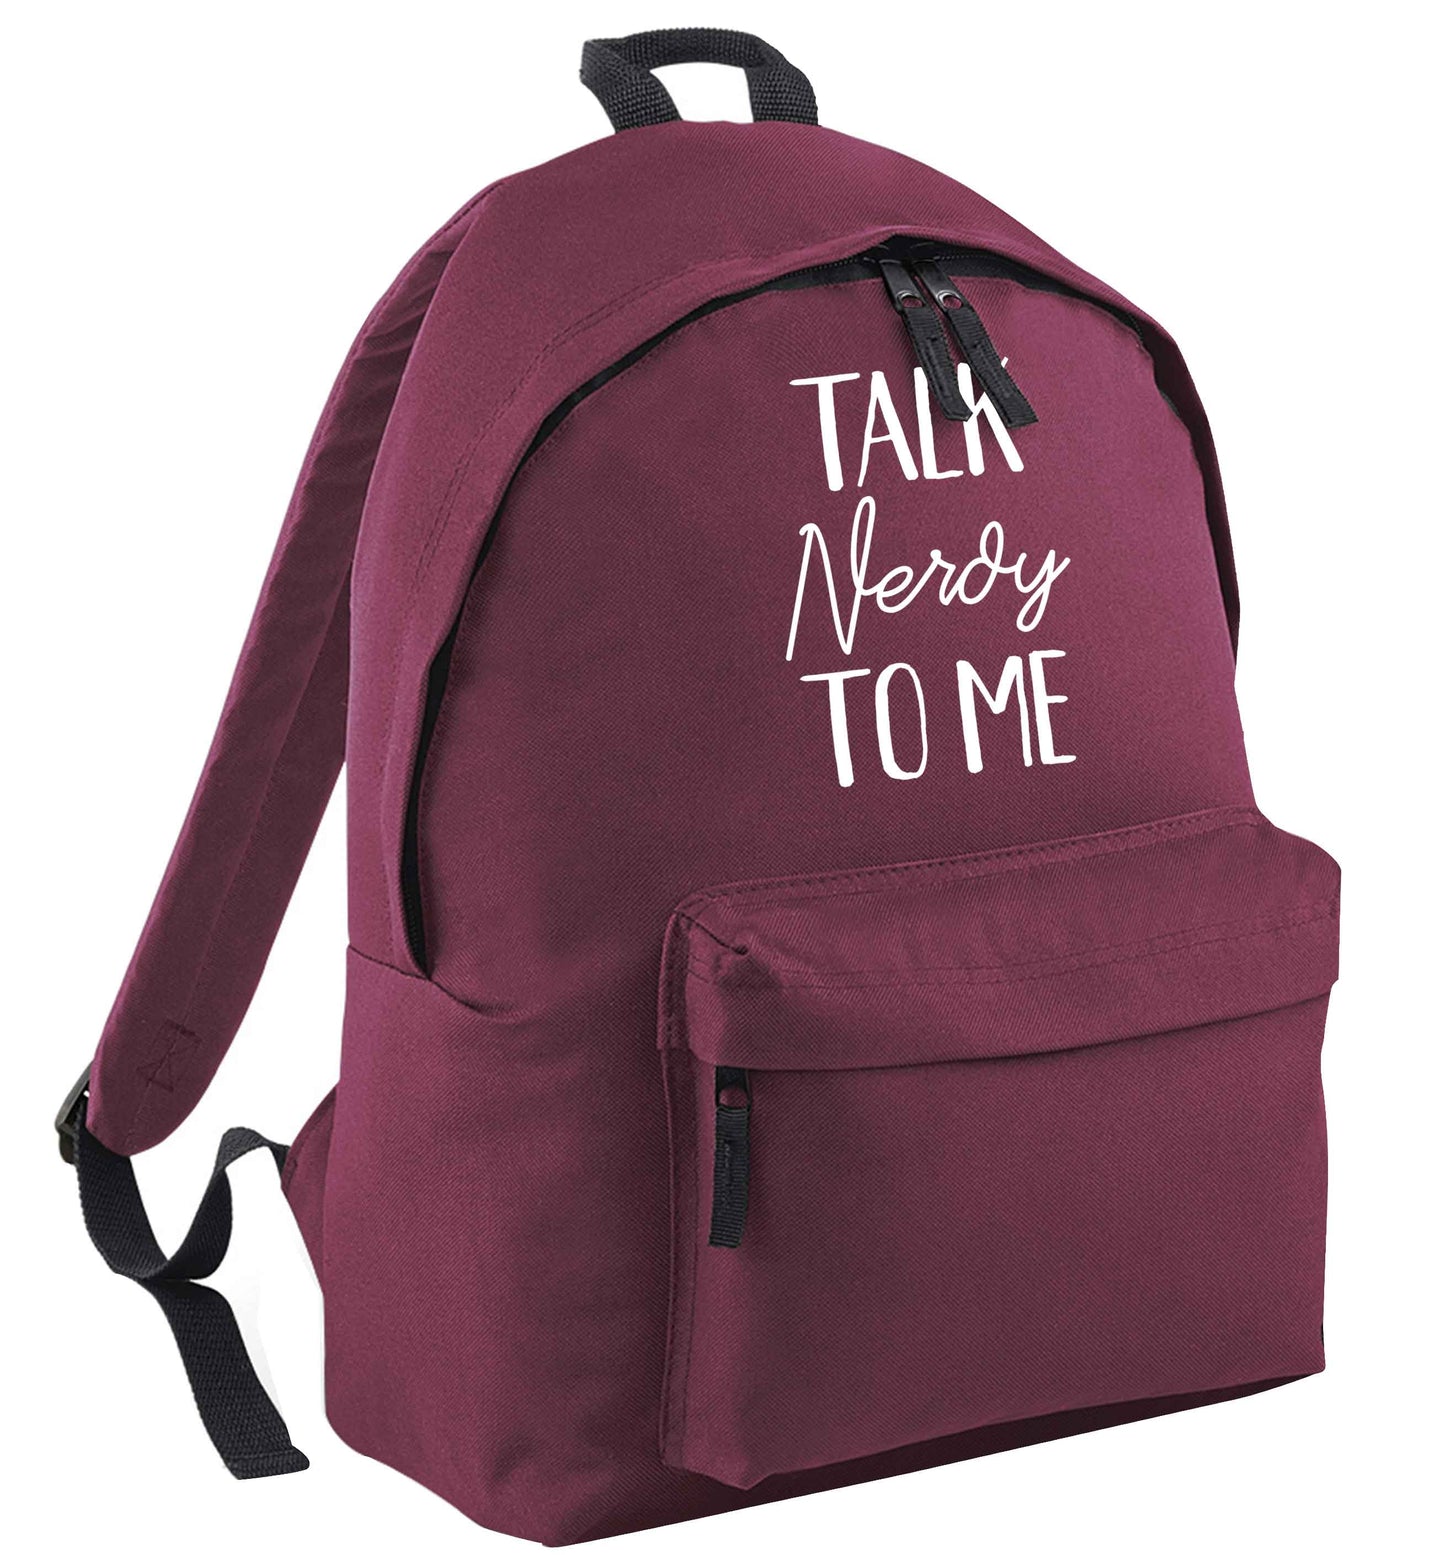 Talk nerdy to me maroon adults backpack